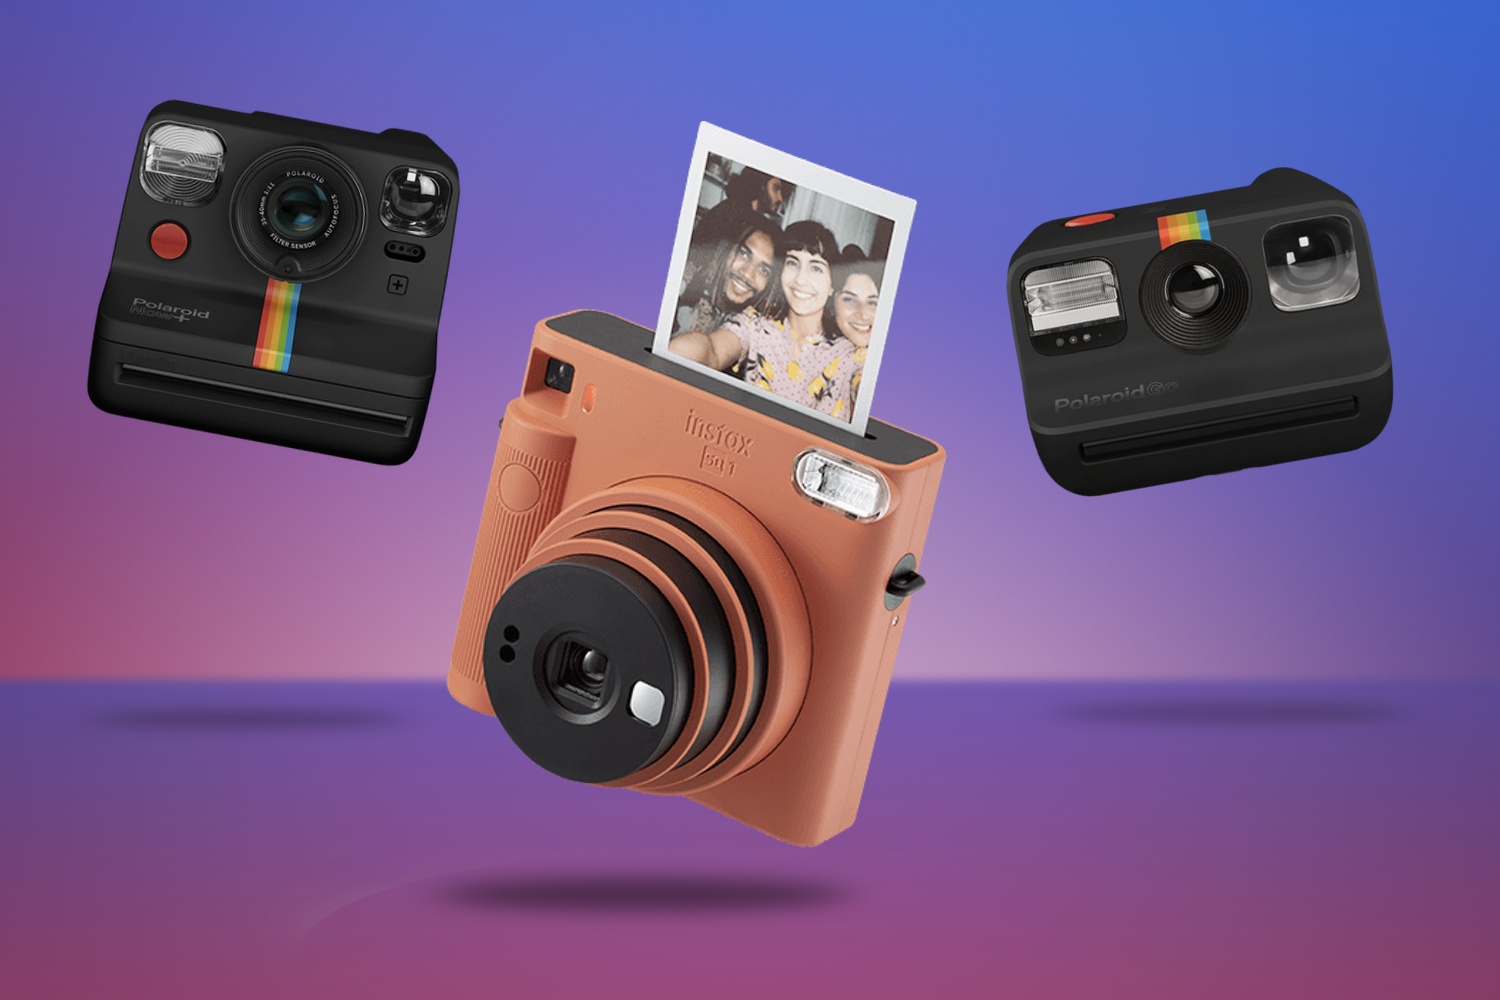 fuji-instant-camera-offers-discounts-save-42-jlcatj-gob-mx